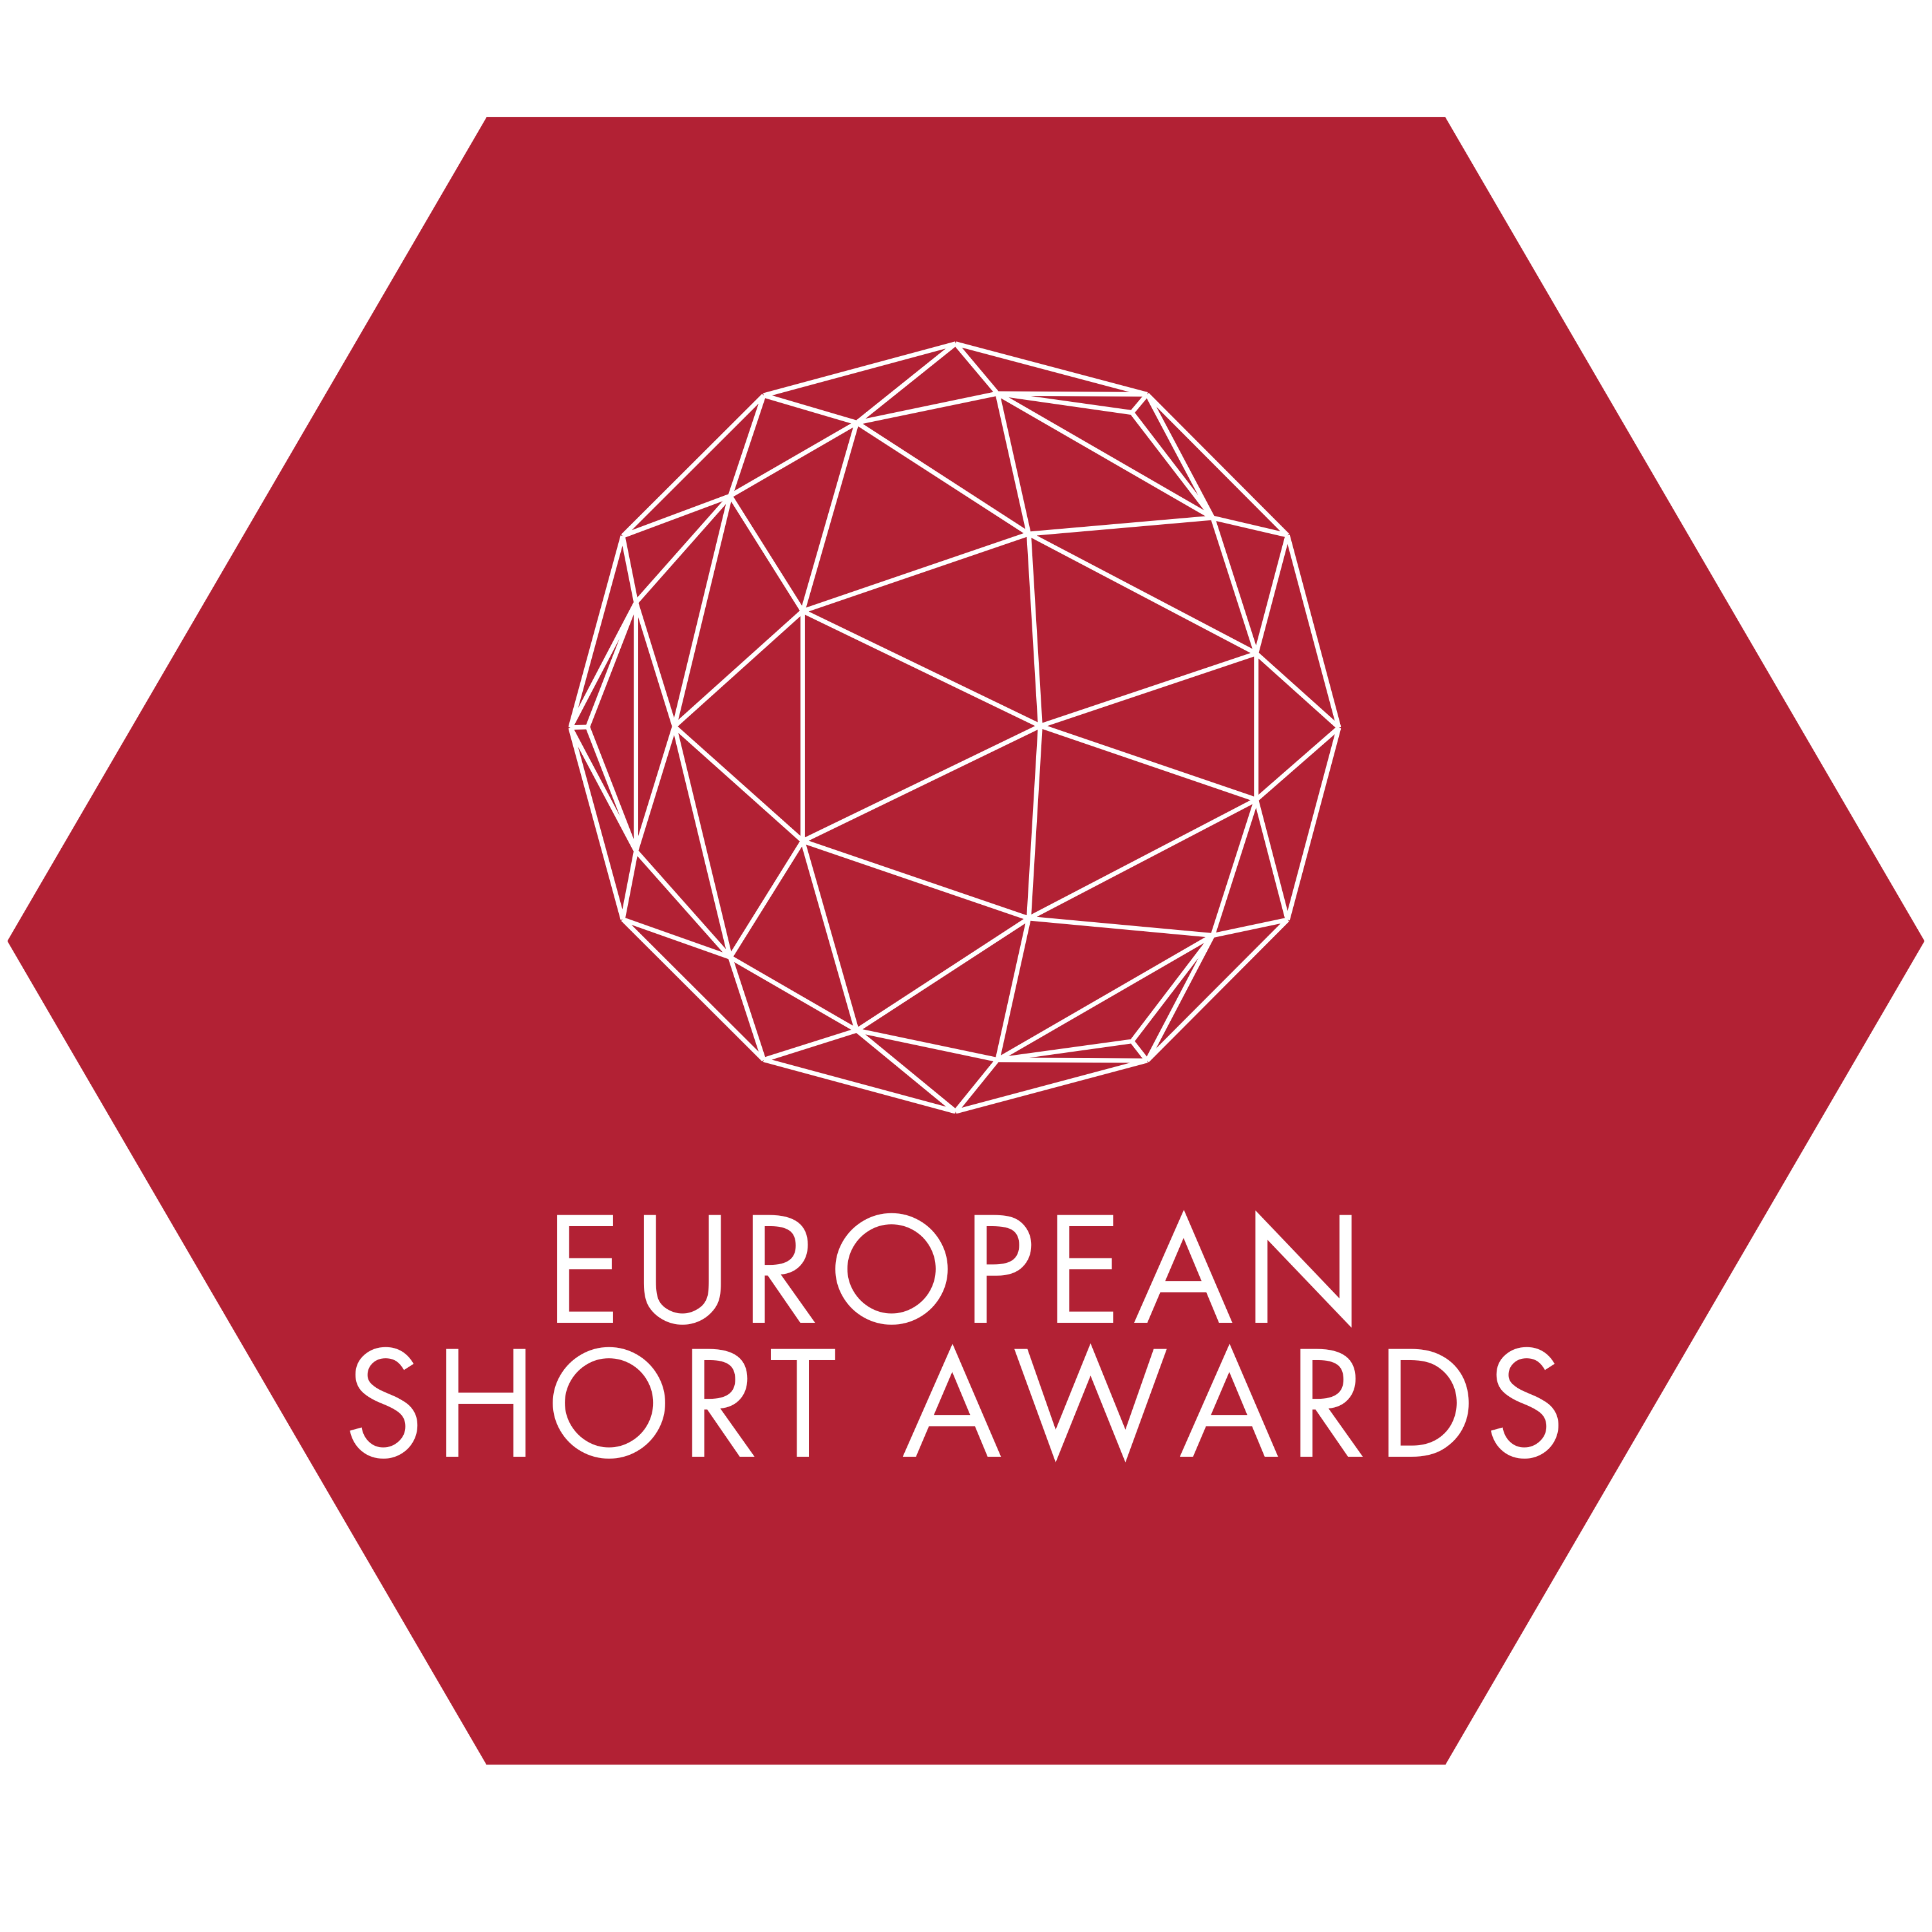 EUROPEAN SHORT AWARDS